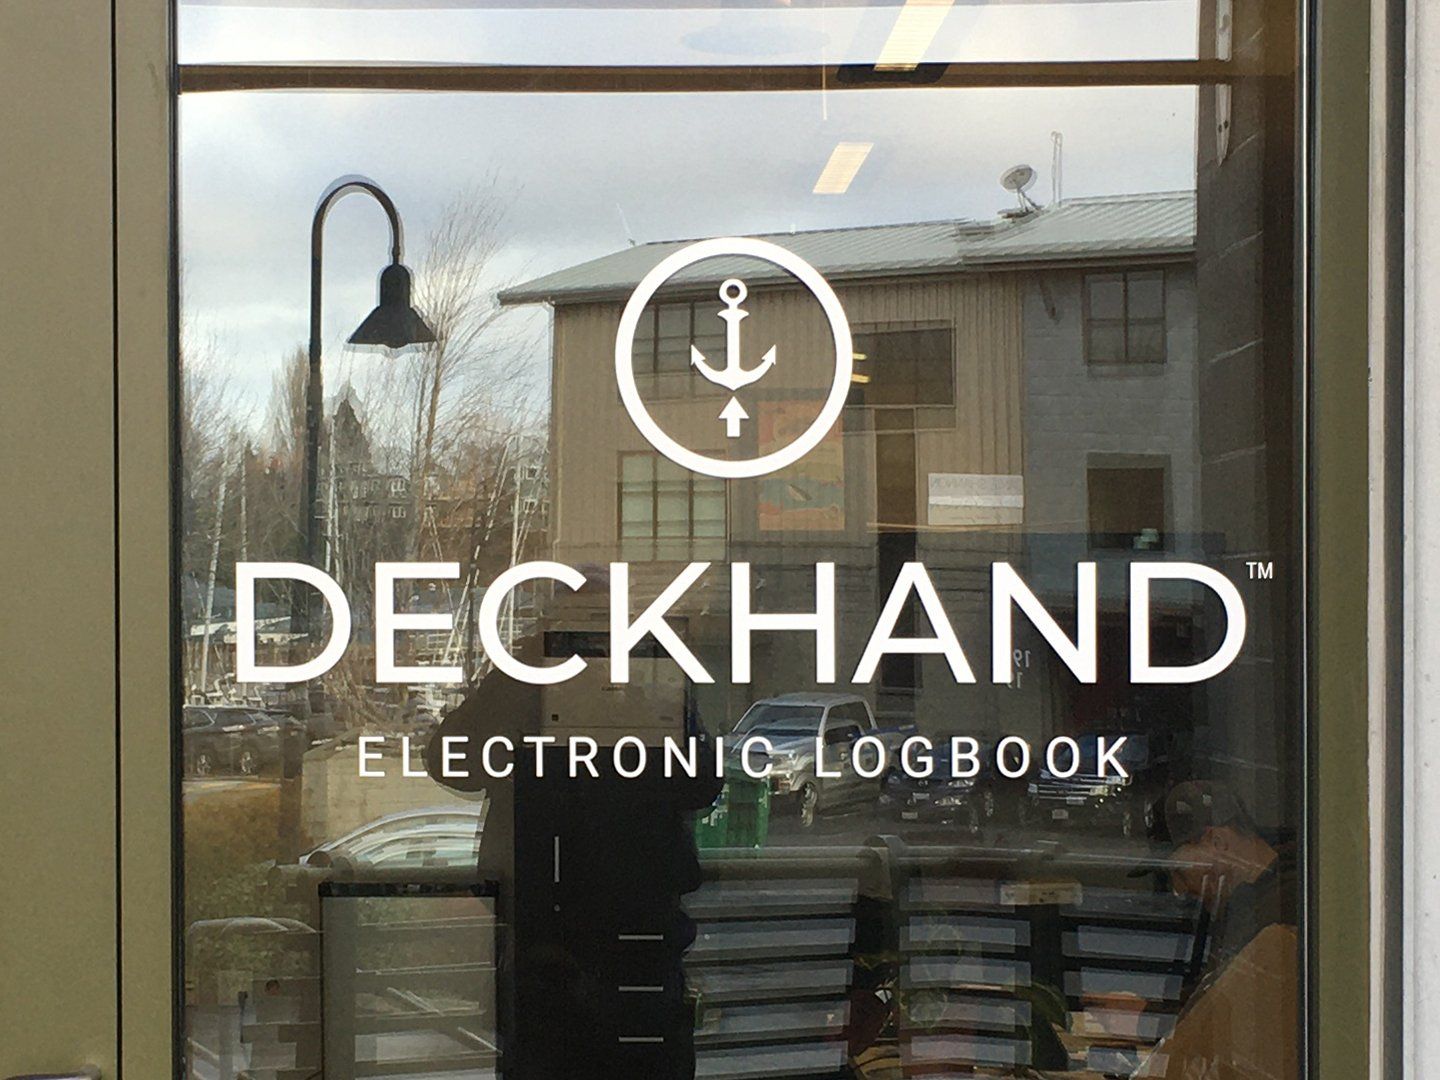 deckhand window lettering